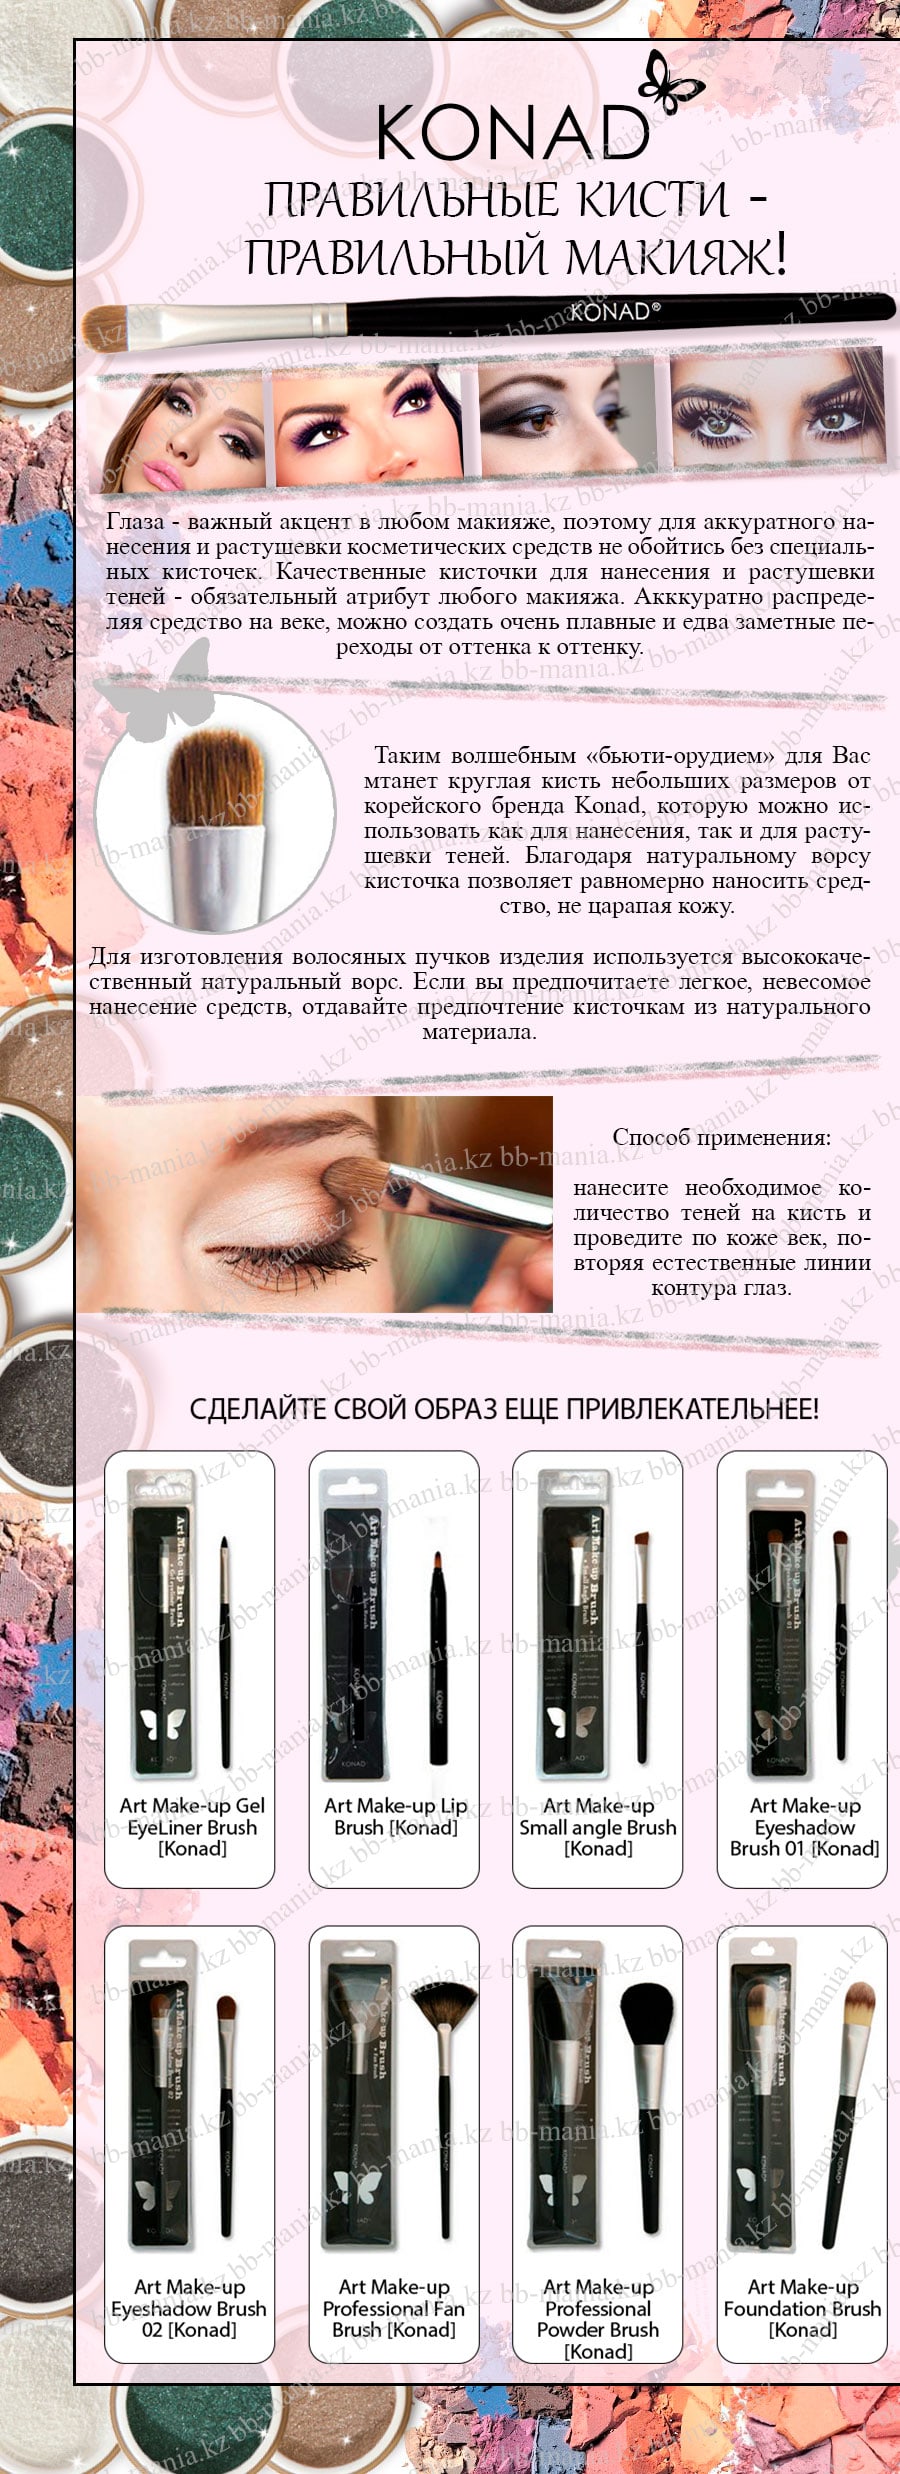 Art-Make-up-Eyeshadow-Brush-01-[Konad]-min